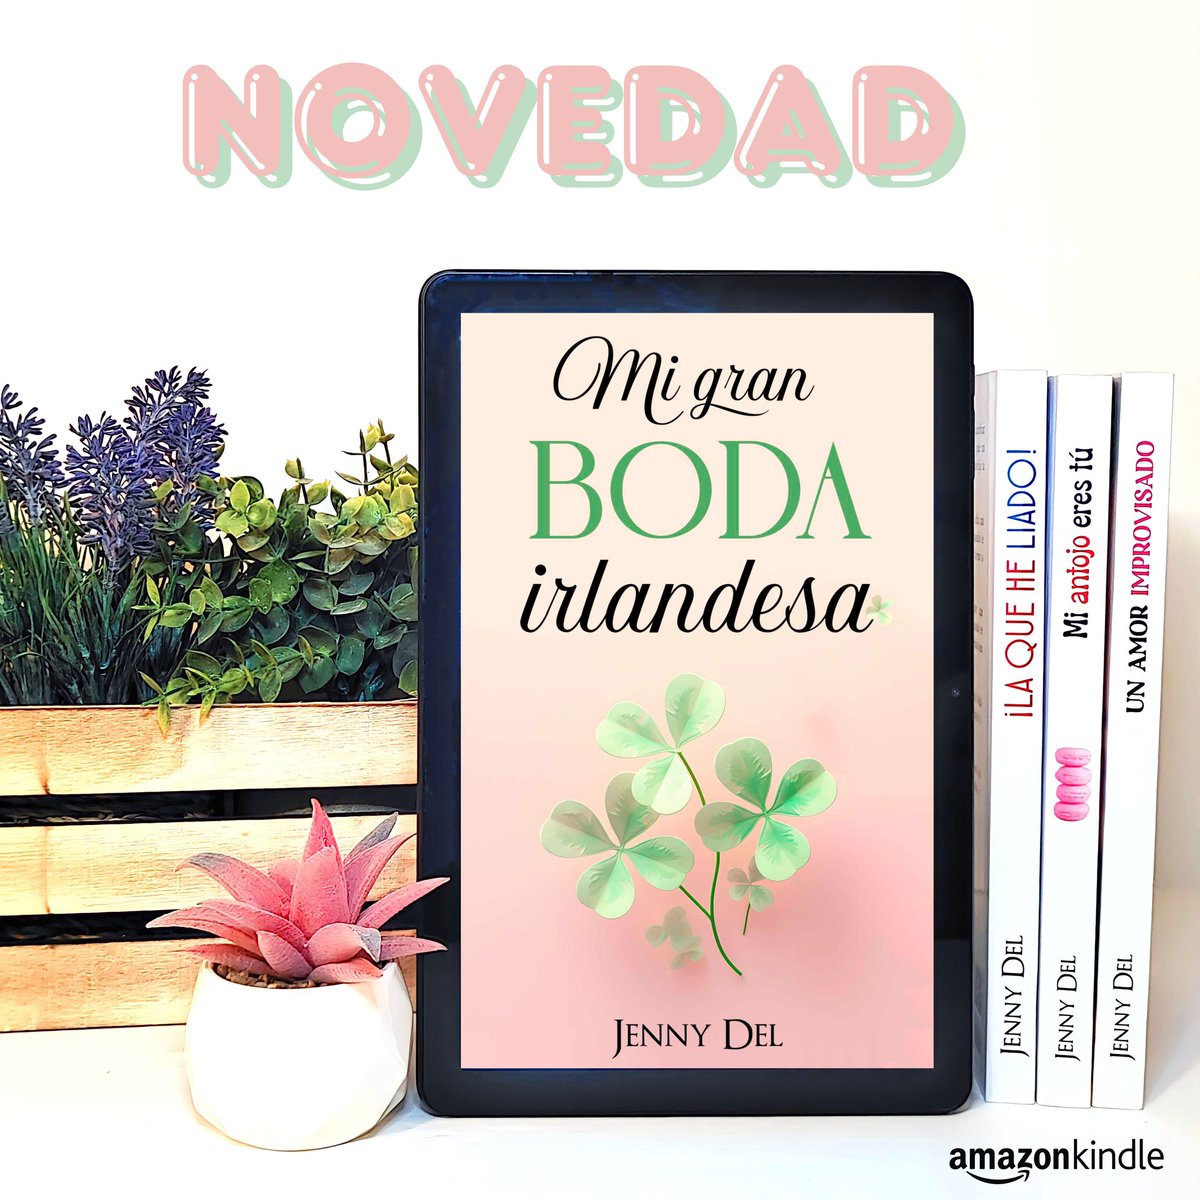 📣 NOVEDAD 📣

❣️ MI GRAN BODA IRLANDESA ❣️

📚📱👉🏼 leer.la/B0CVDZBVD5

𝑇𝑜𝑑𝑎𝑠 𝑙𝑎𝑠 𝑛𝑜𝑣𝑒𝑙𝑎𝑠 𝑑𝑒 𝑙𝑎 𝑎𝑢𝑡𝑜𝑟𝑎 ❣️ relinks.me/JennyDel

#Amazon #KindleUnlimited #ebook #queleer #escritor #LecturaRecomendada #amor #novelaromantica #jennydelautora